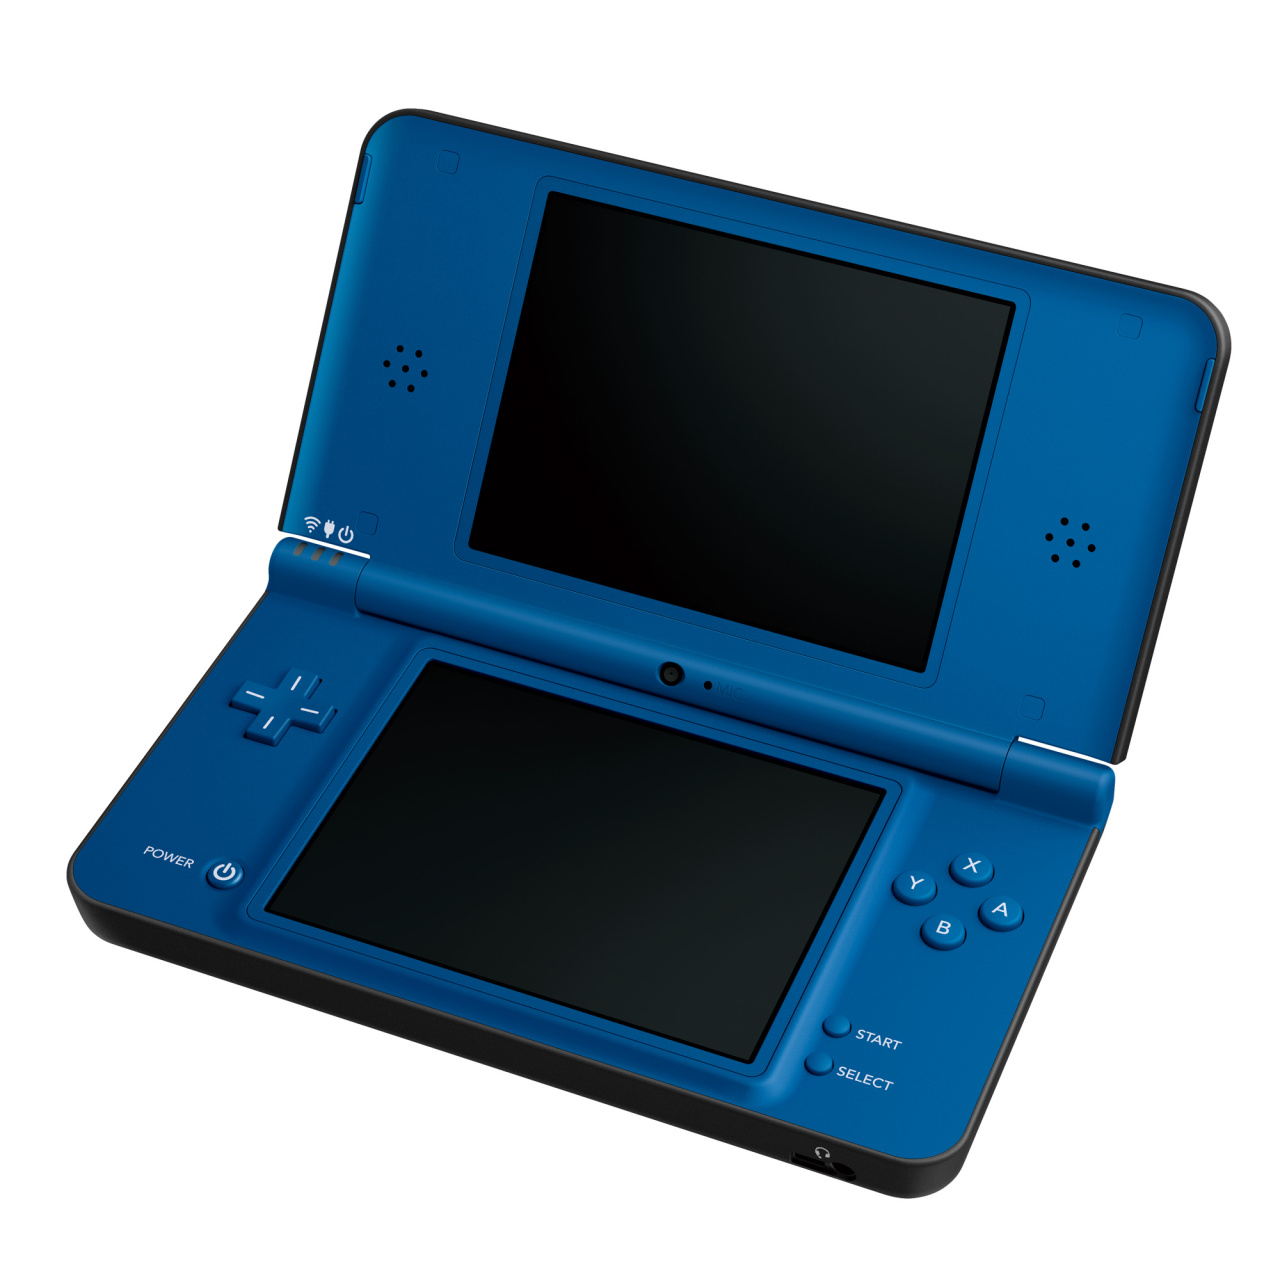 Nintendo DSi XL gets three new colours